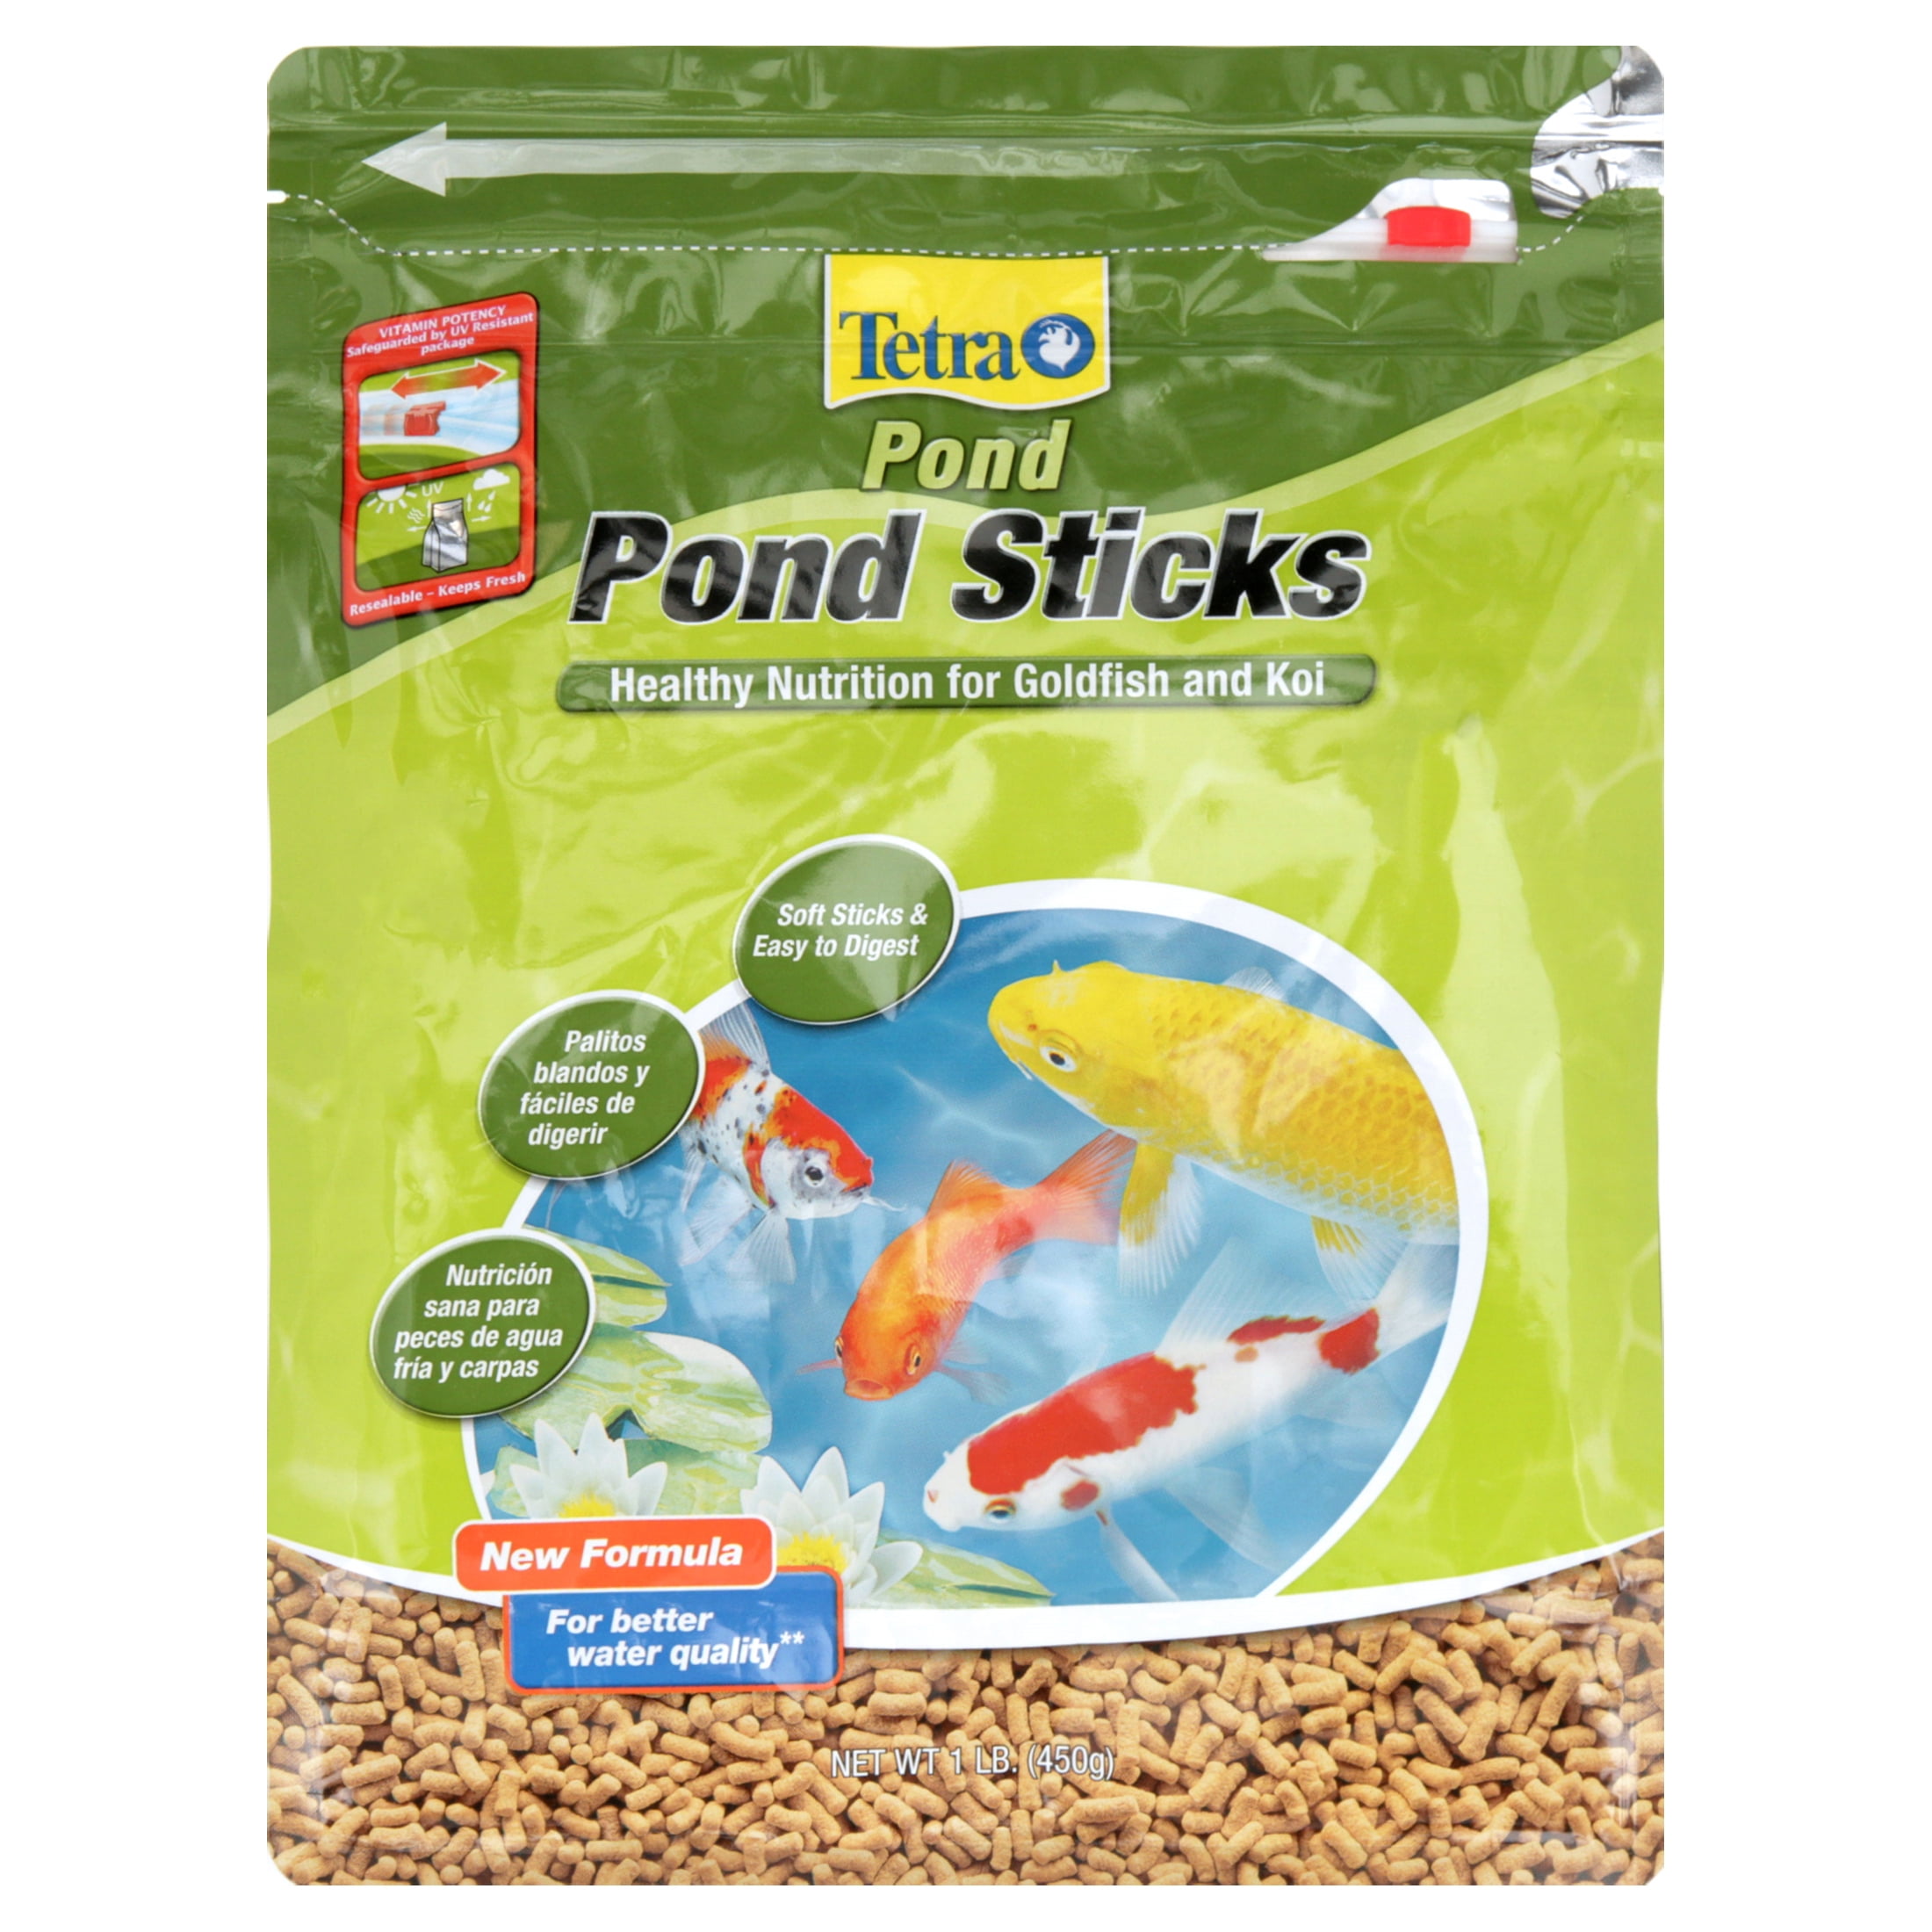  Tetra Pond Koi Sticks 4L (650g) - 170162 : Pet Supplies